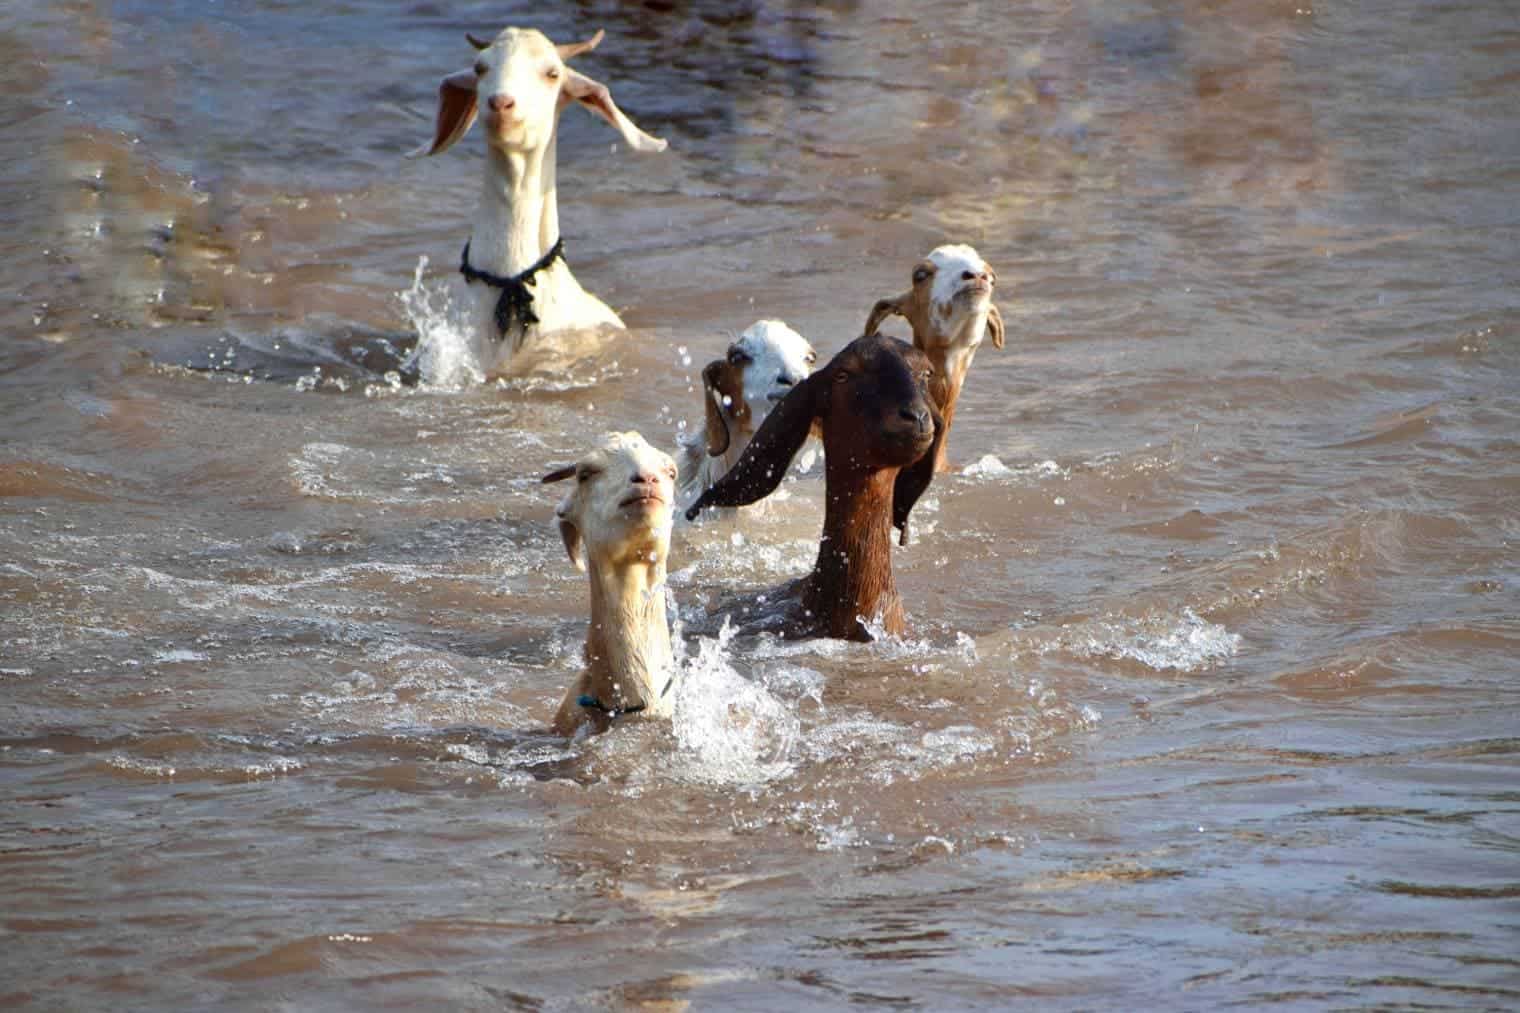 Goats Swimmin in muddy water